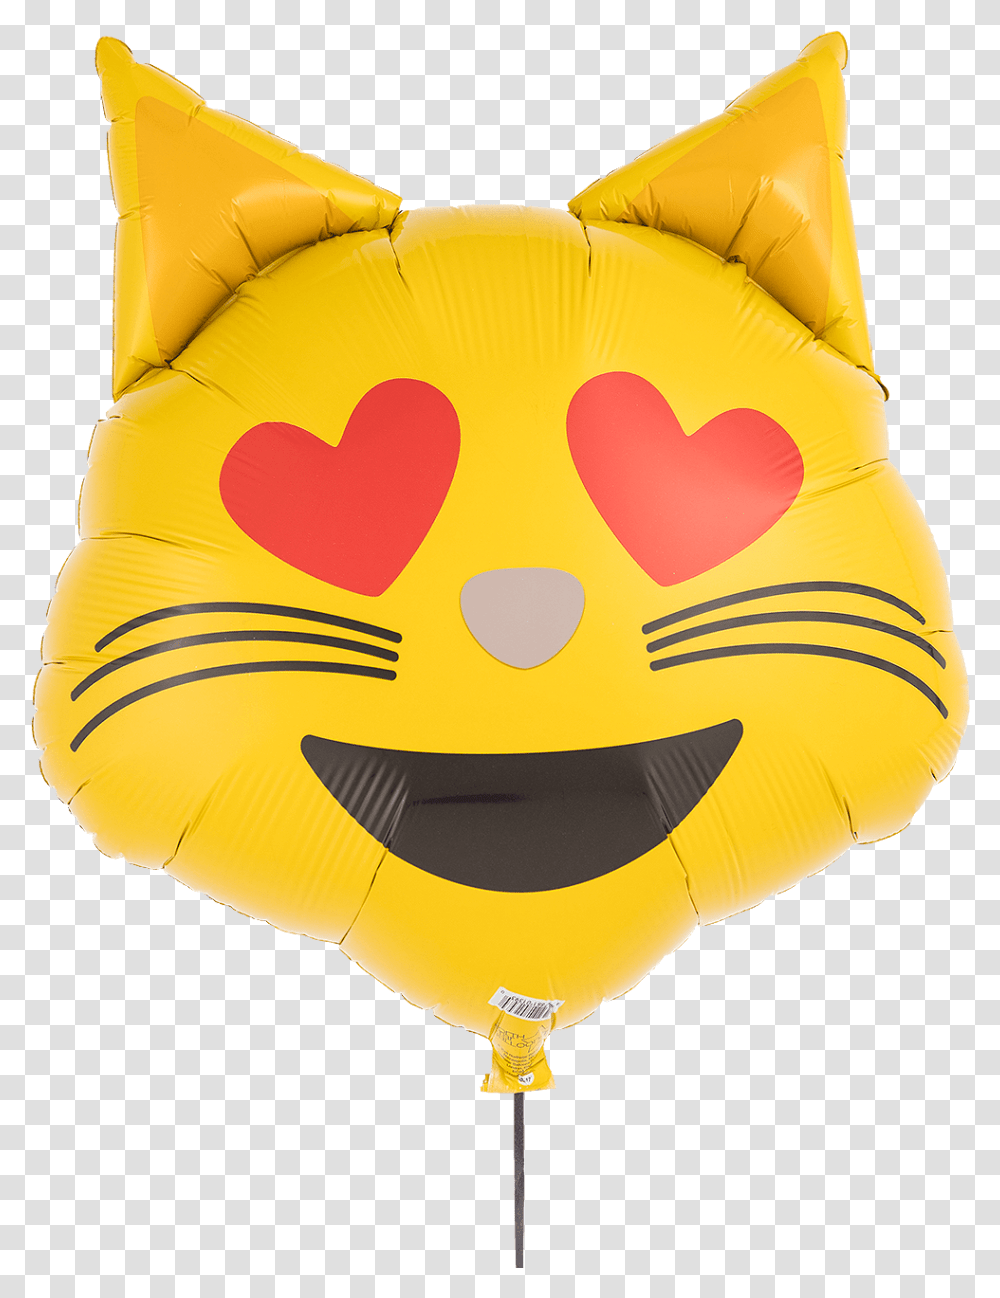 Cat, Ball, Balloon, Inflatable, Hot Air Balloon Transparent Png